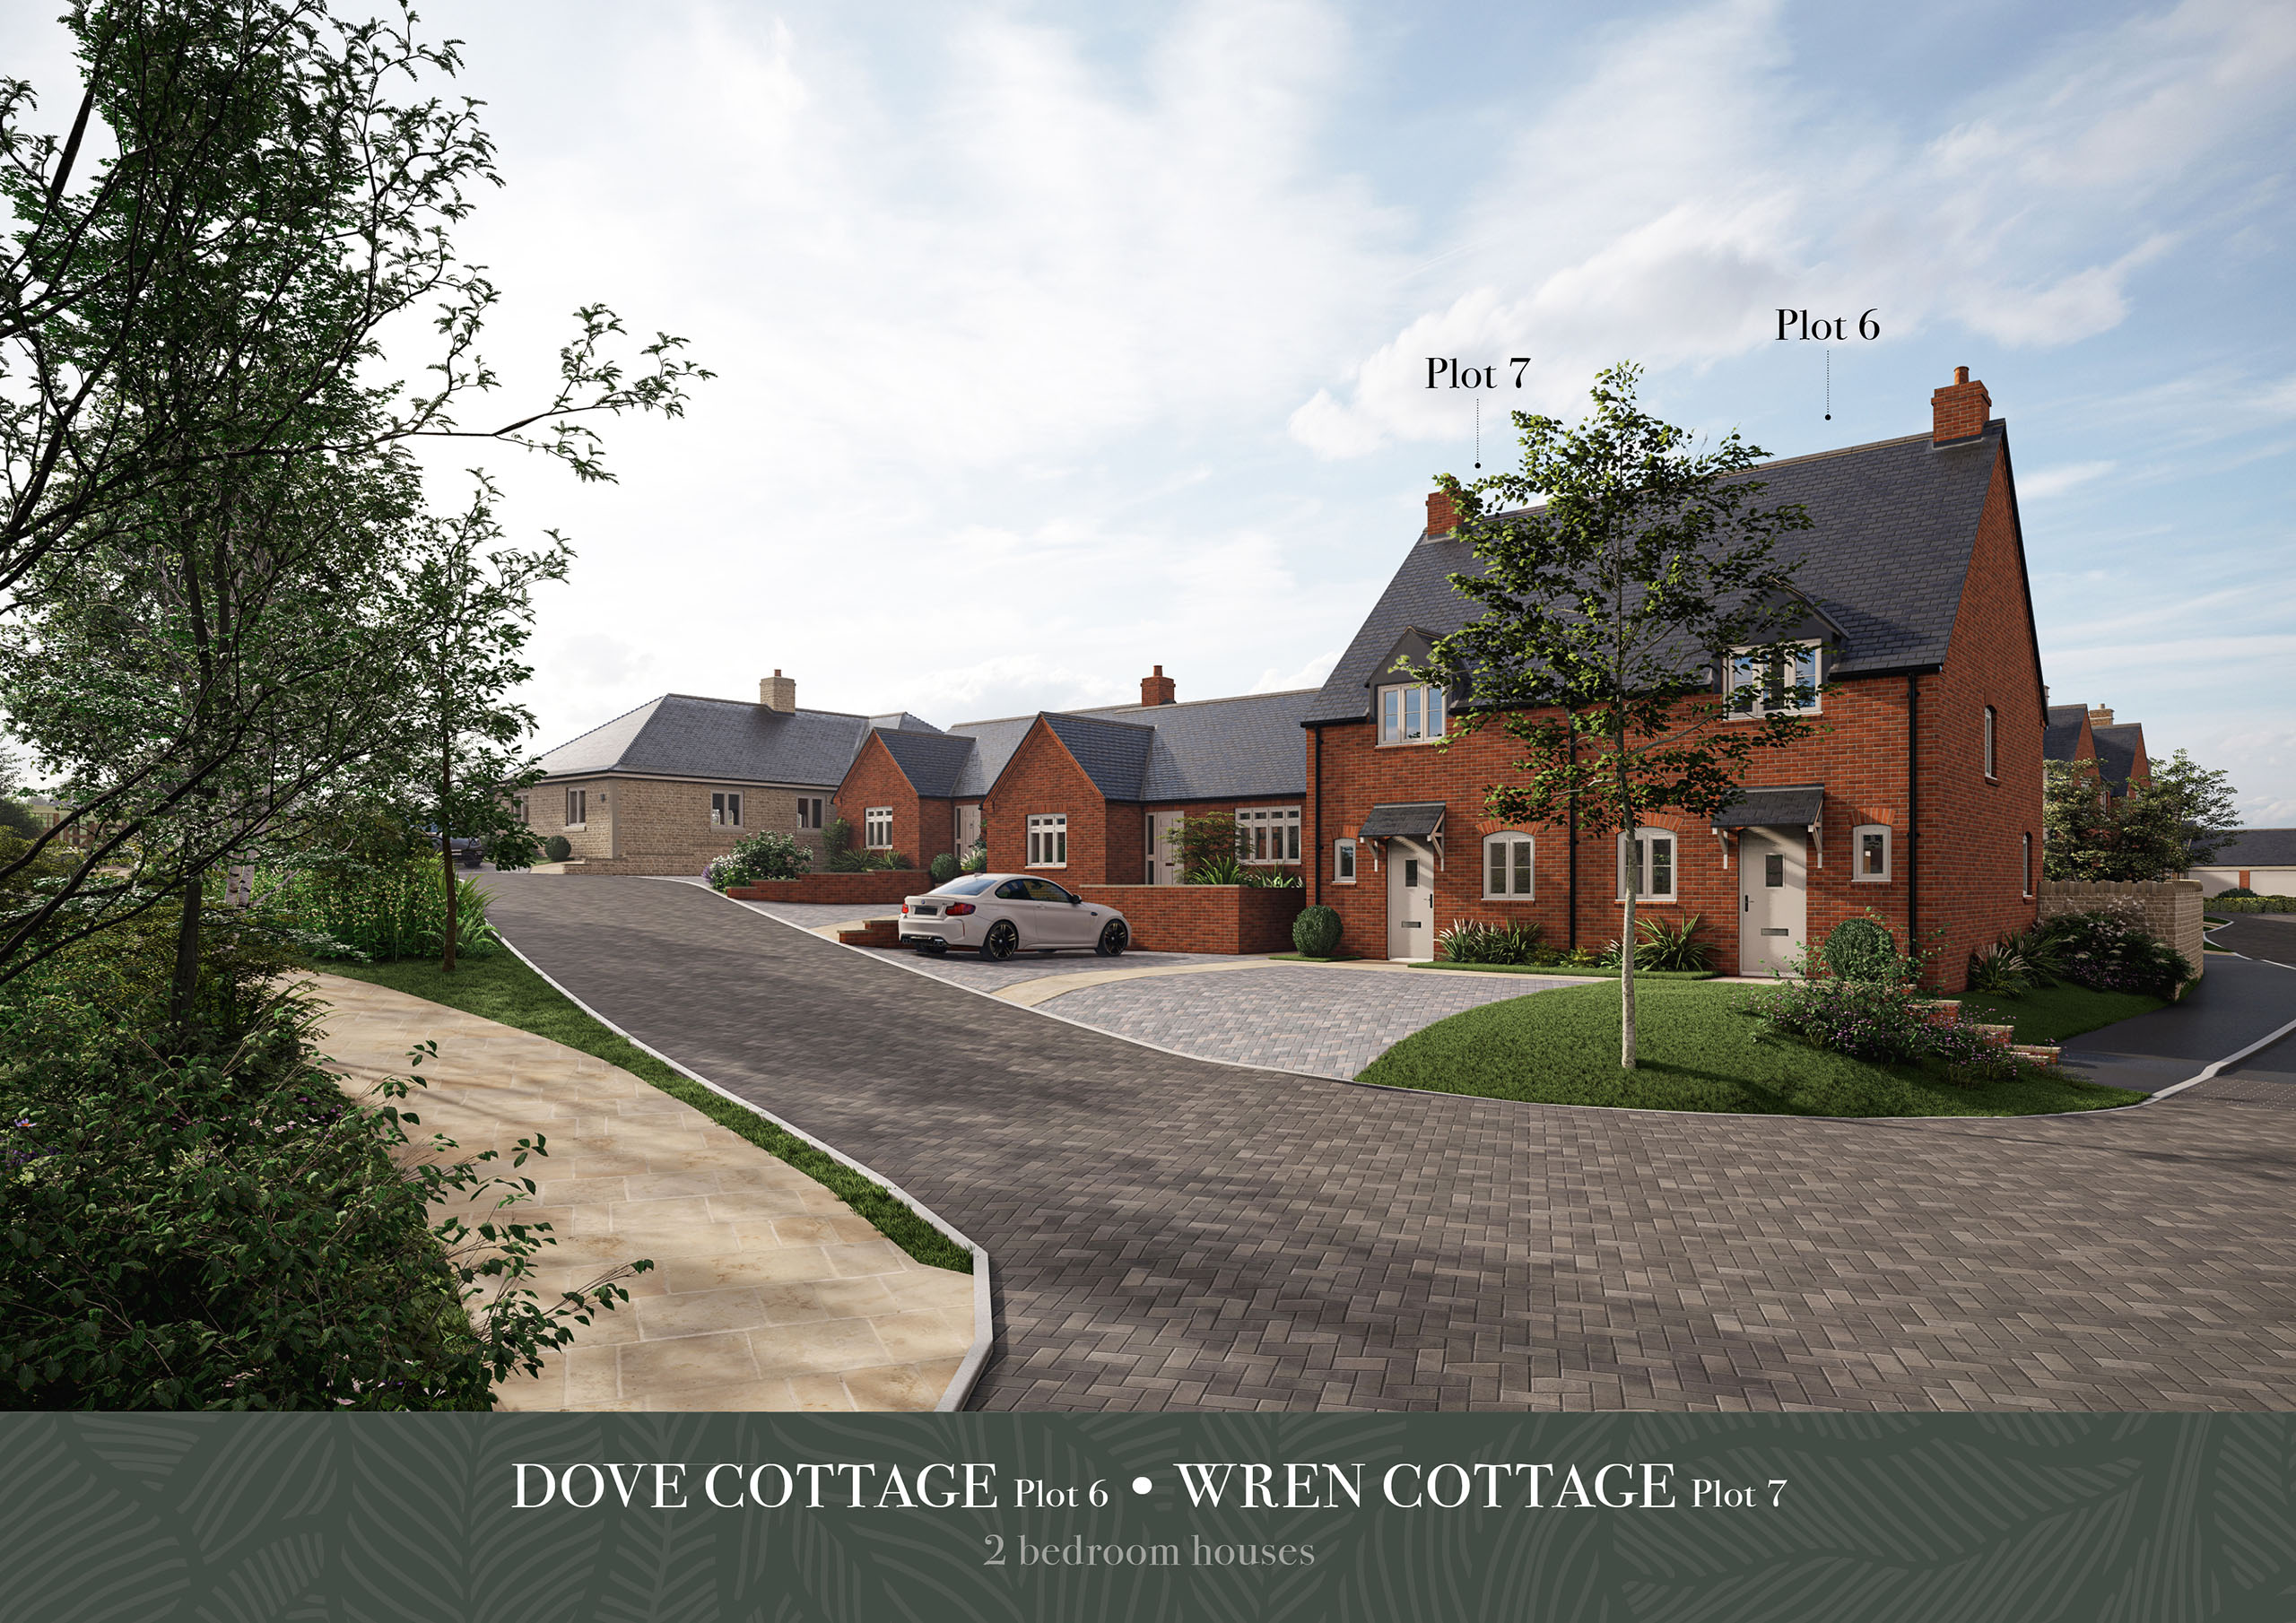 Dove Cottage - Plot 6 & Wren Cottage - Plot 7 